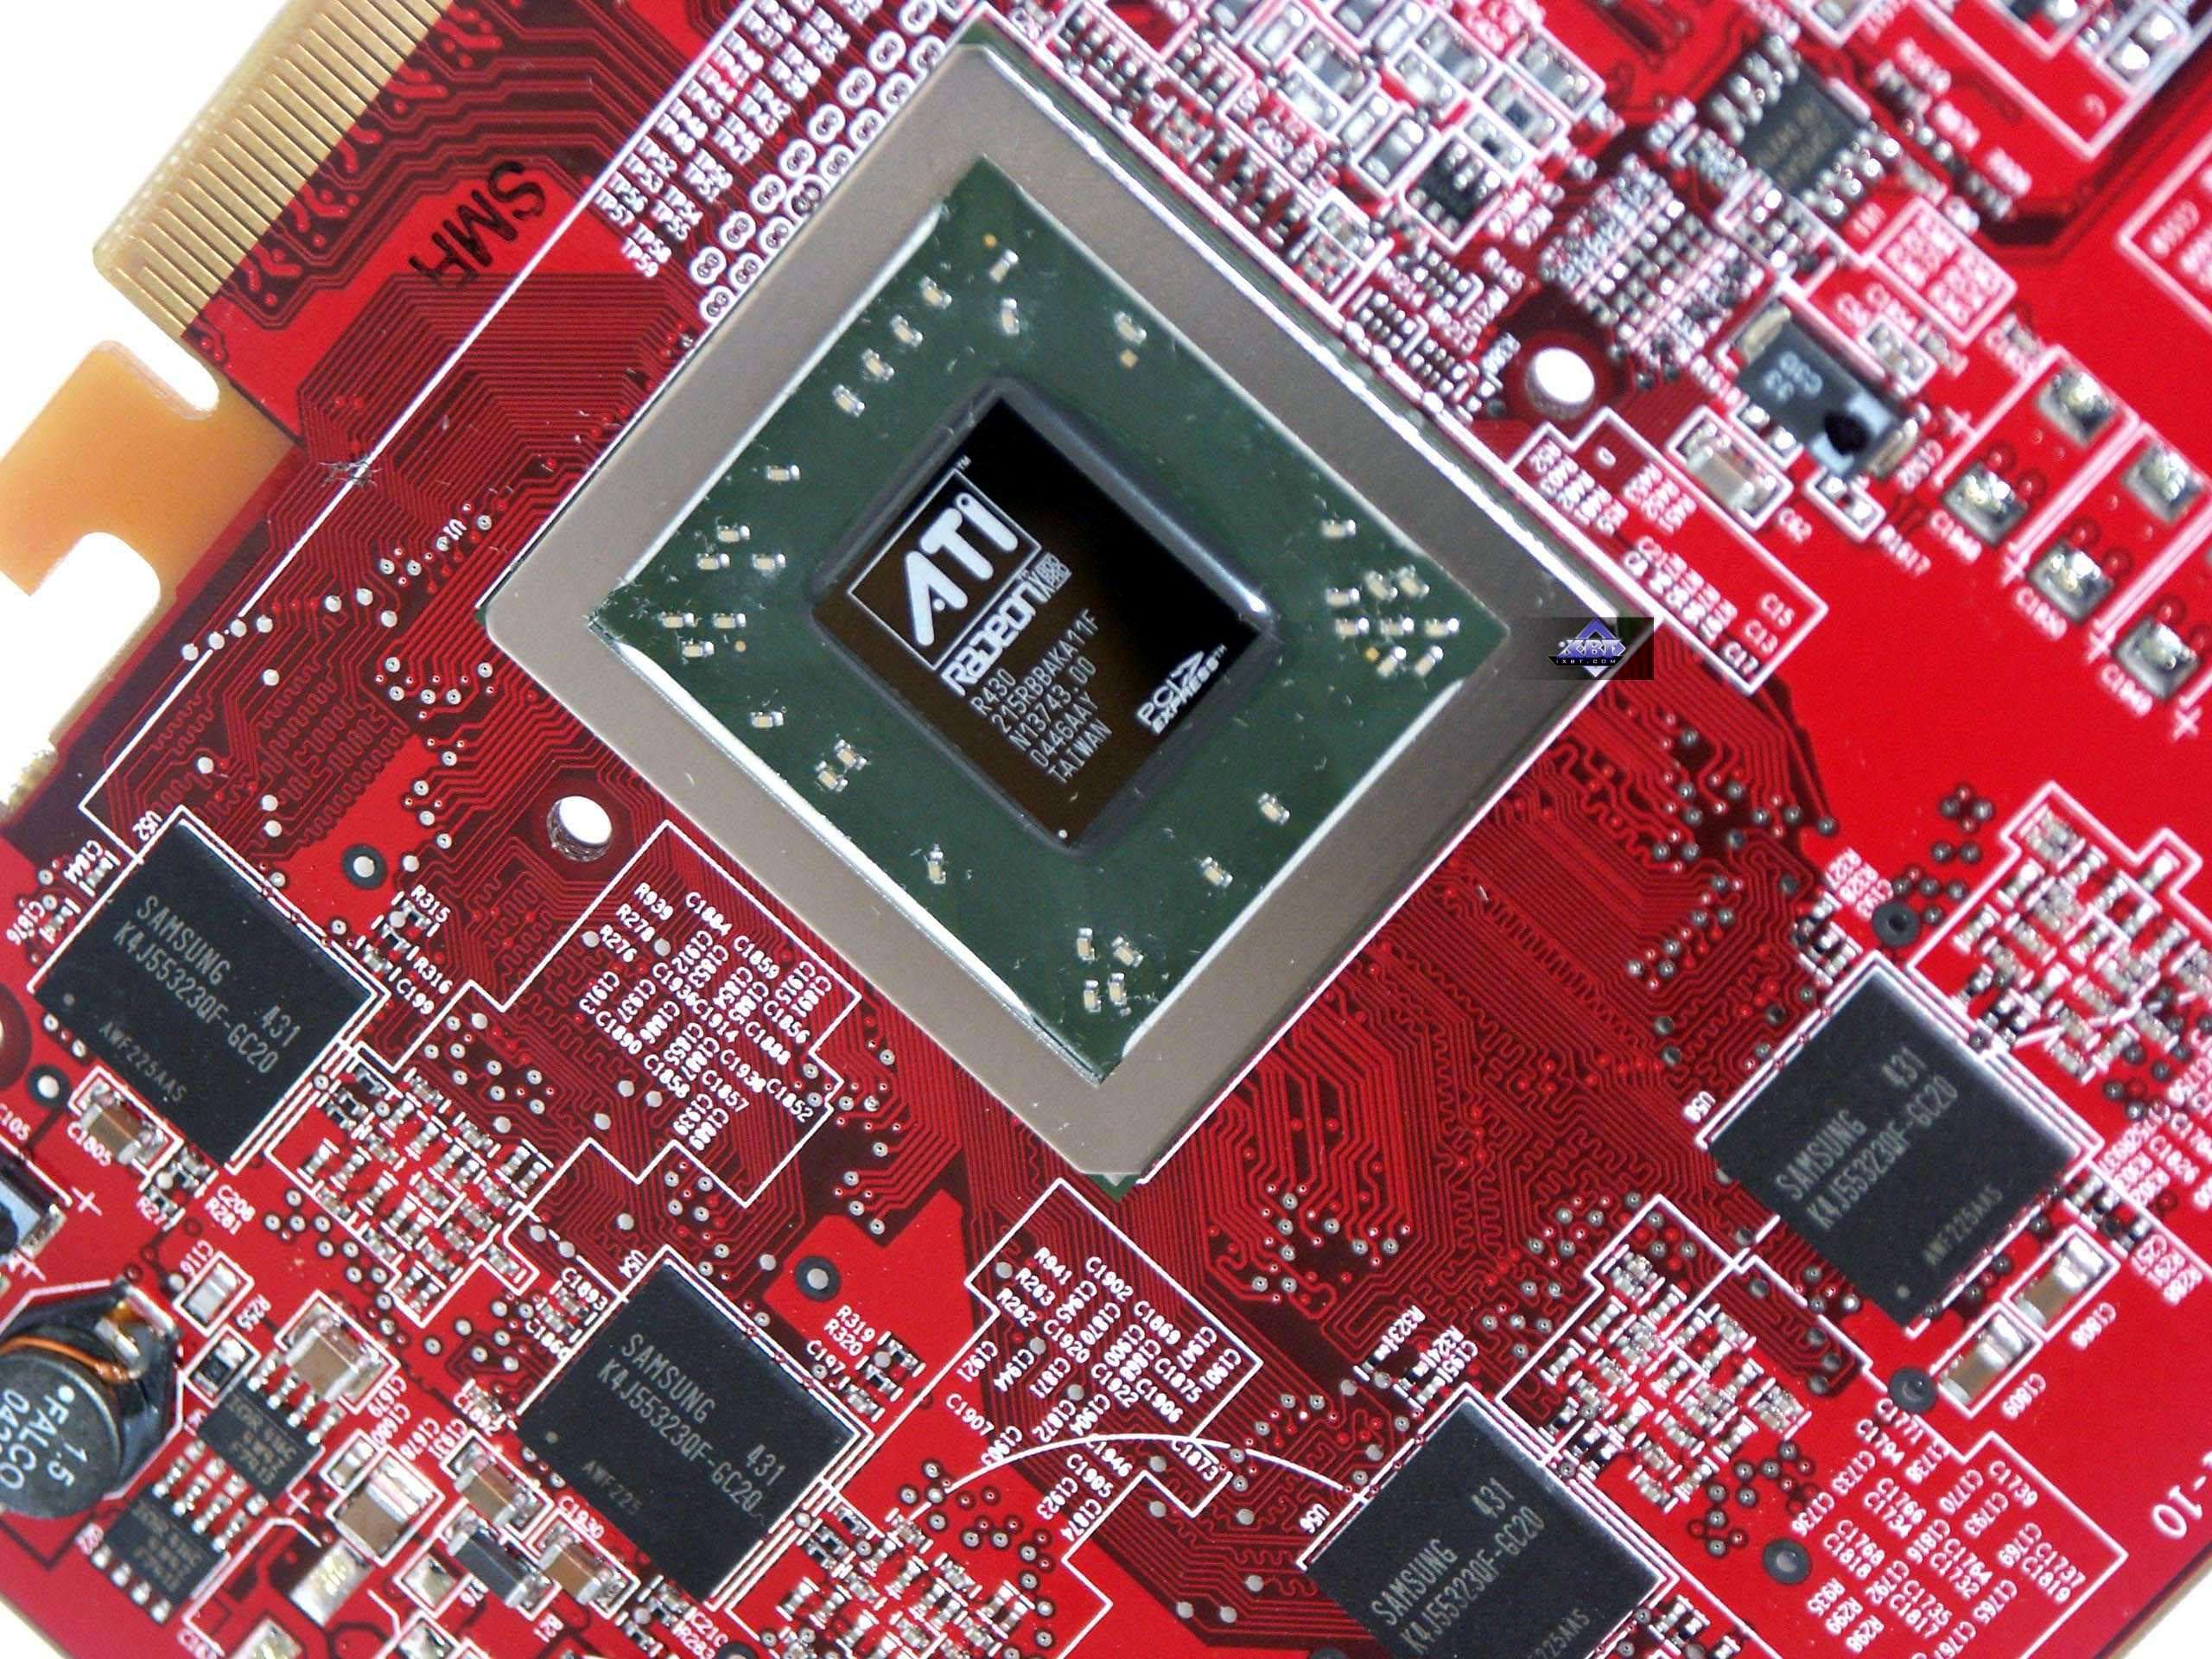 AMD Mobility Radeon x700. AMD Radeon 430. Radeon 7600.